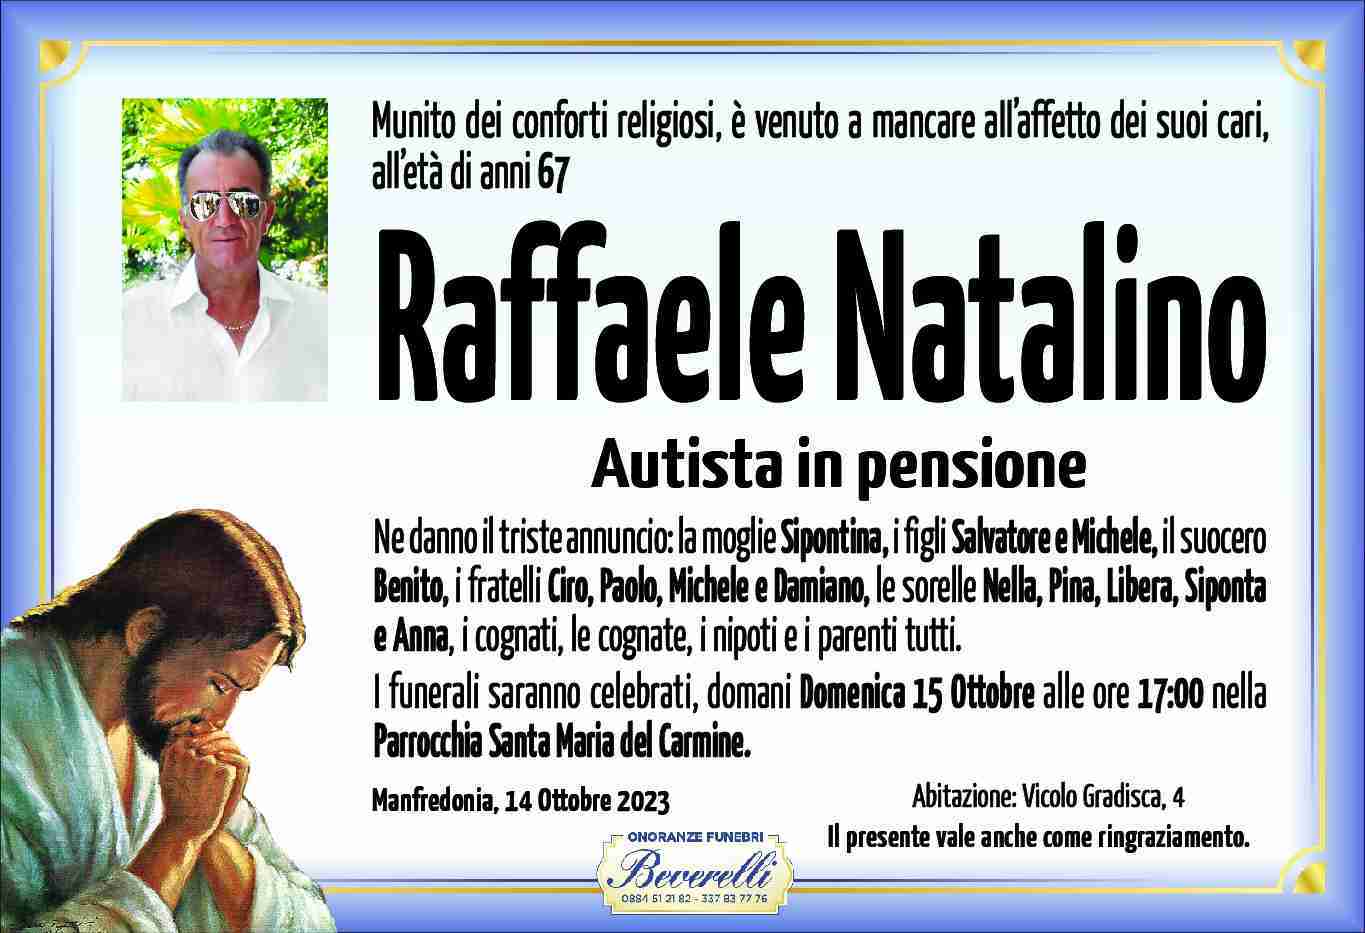 Raffaele Natalino